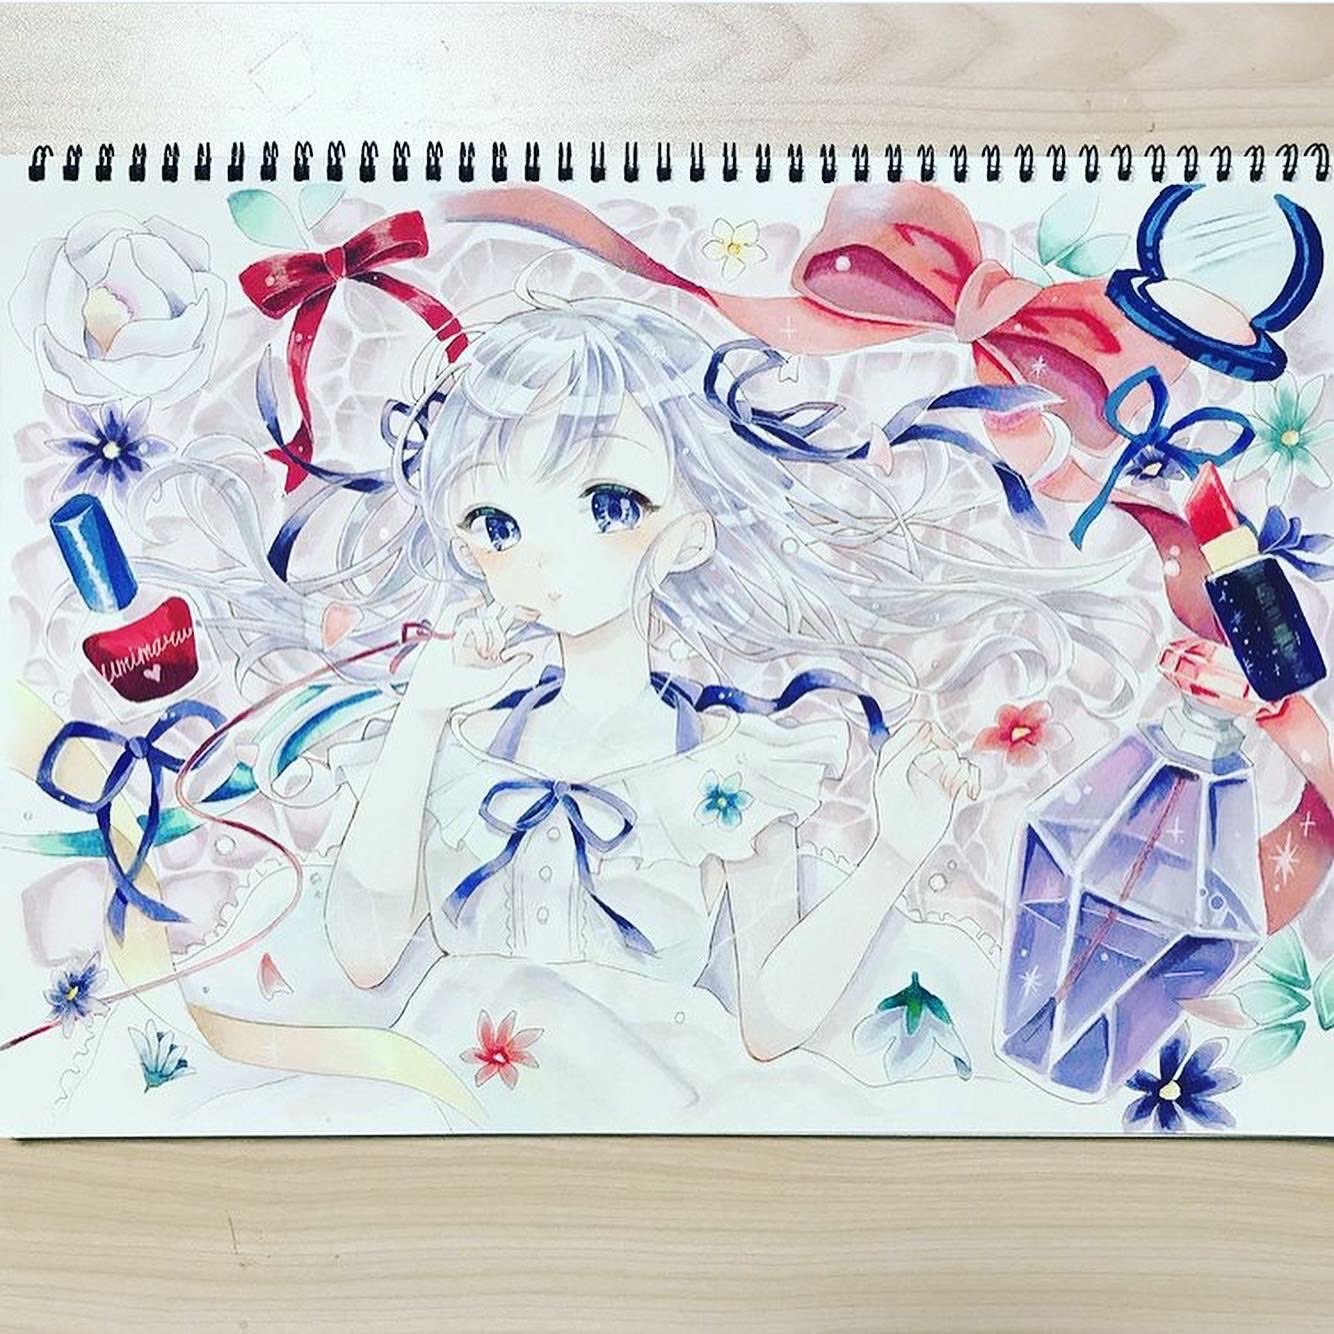 Umimaru ホロライブメンバー描きたい 中1か中2の時にコピックで描いたイラストです ﾉ 女の子 イラスト 中学生イラスト イラスト好きさんと繋がりたい イラスト アナログイラスト りぼん 水 オリジナルイラスト 絵柄が好みって人に